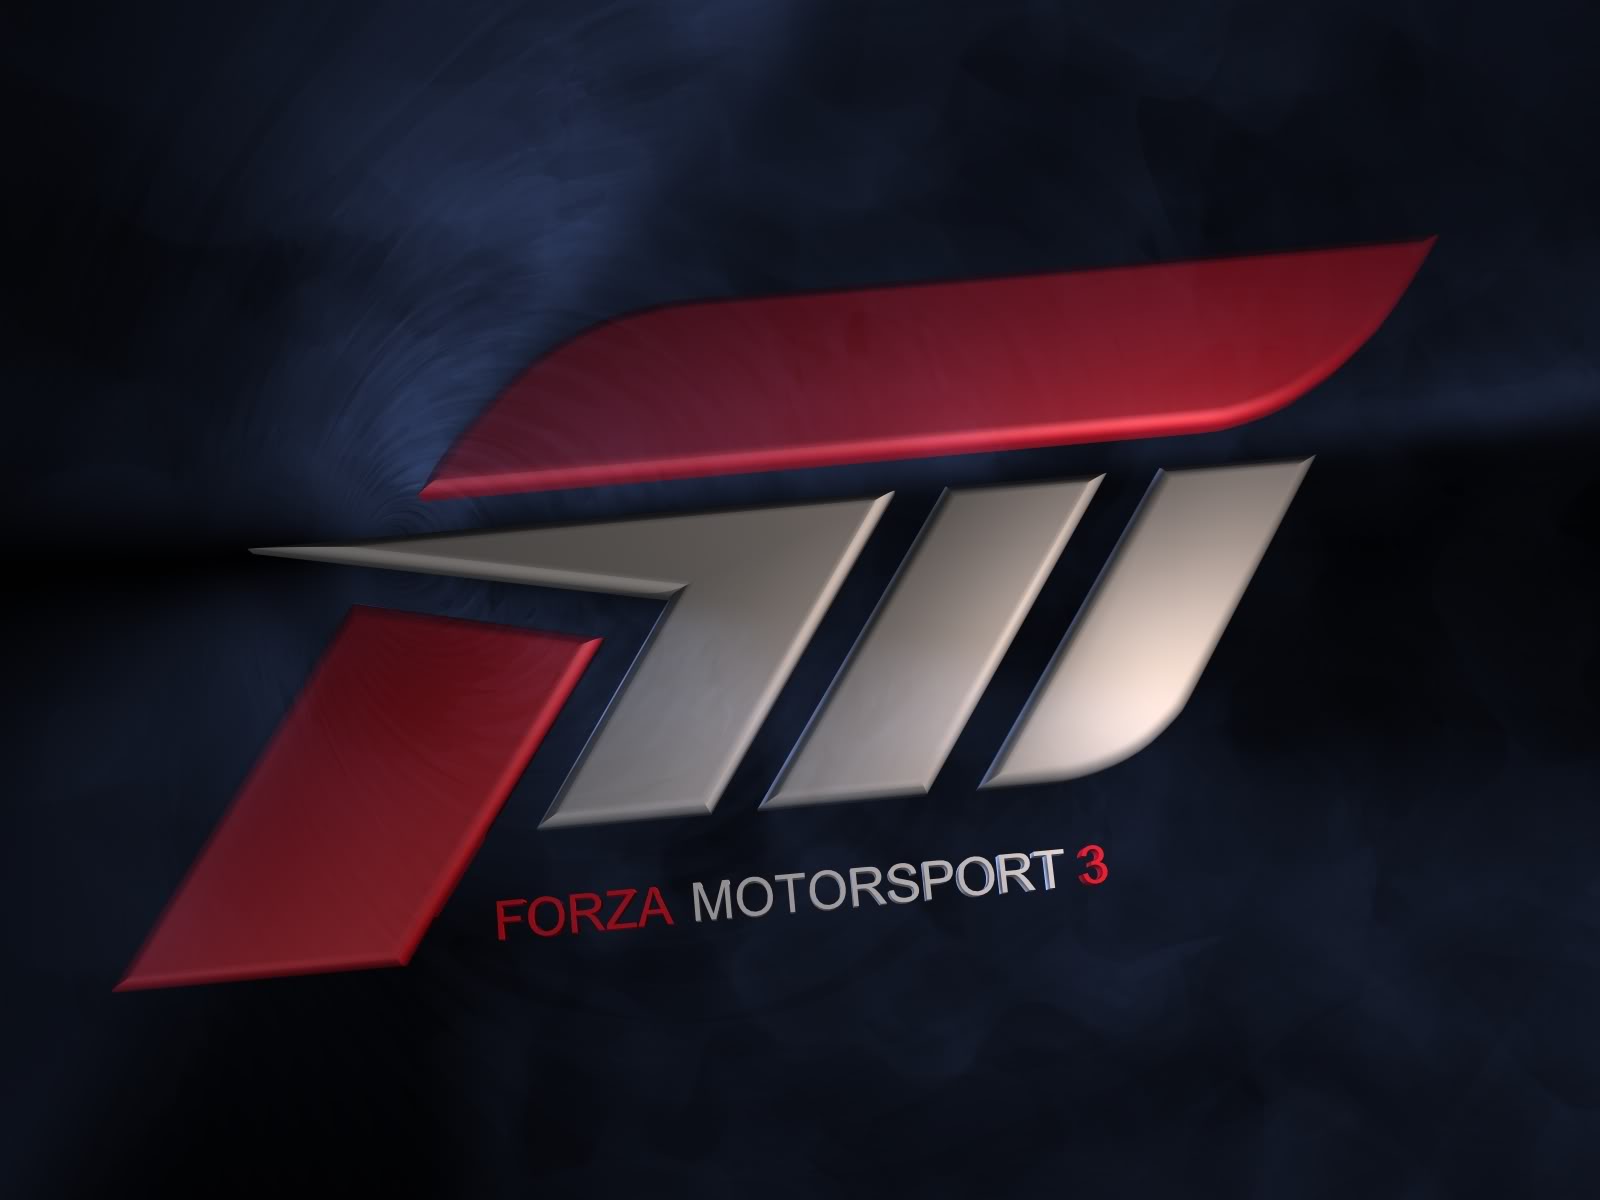 ForzaMotorsport3 logo 2.jpg